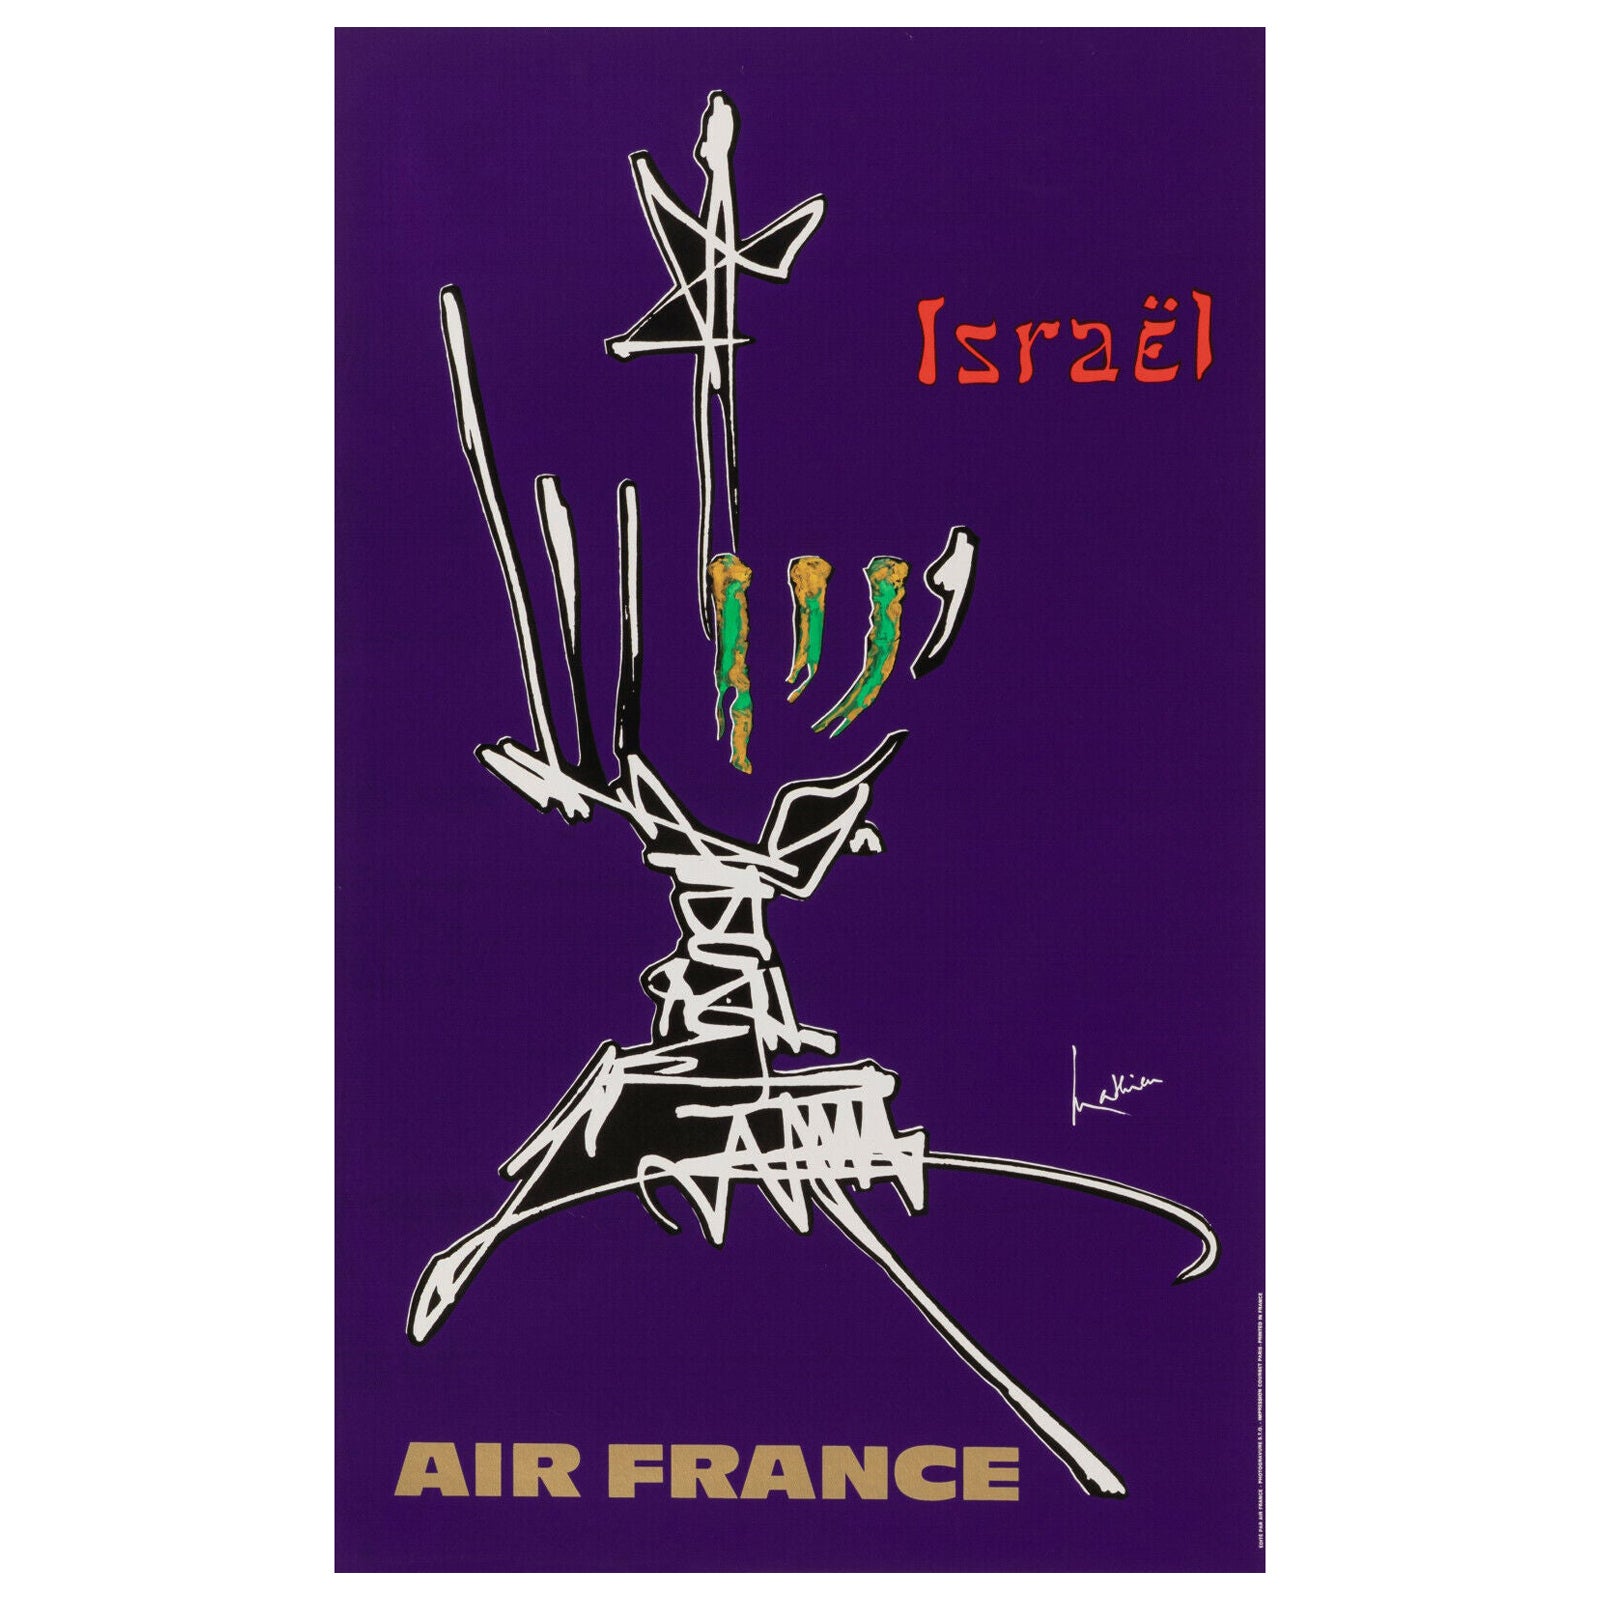 Georges Mathieu, Original Vintage Airline Poster, Air France, Israel, 1967